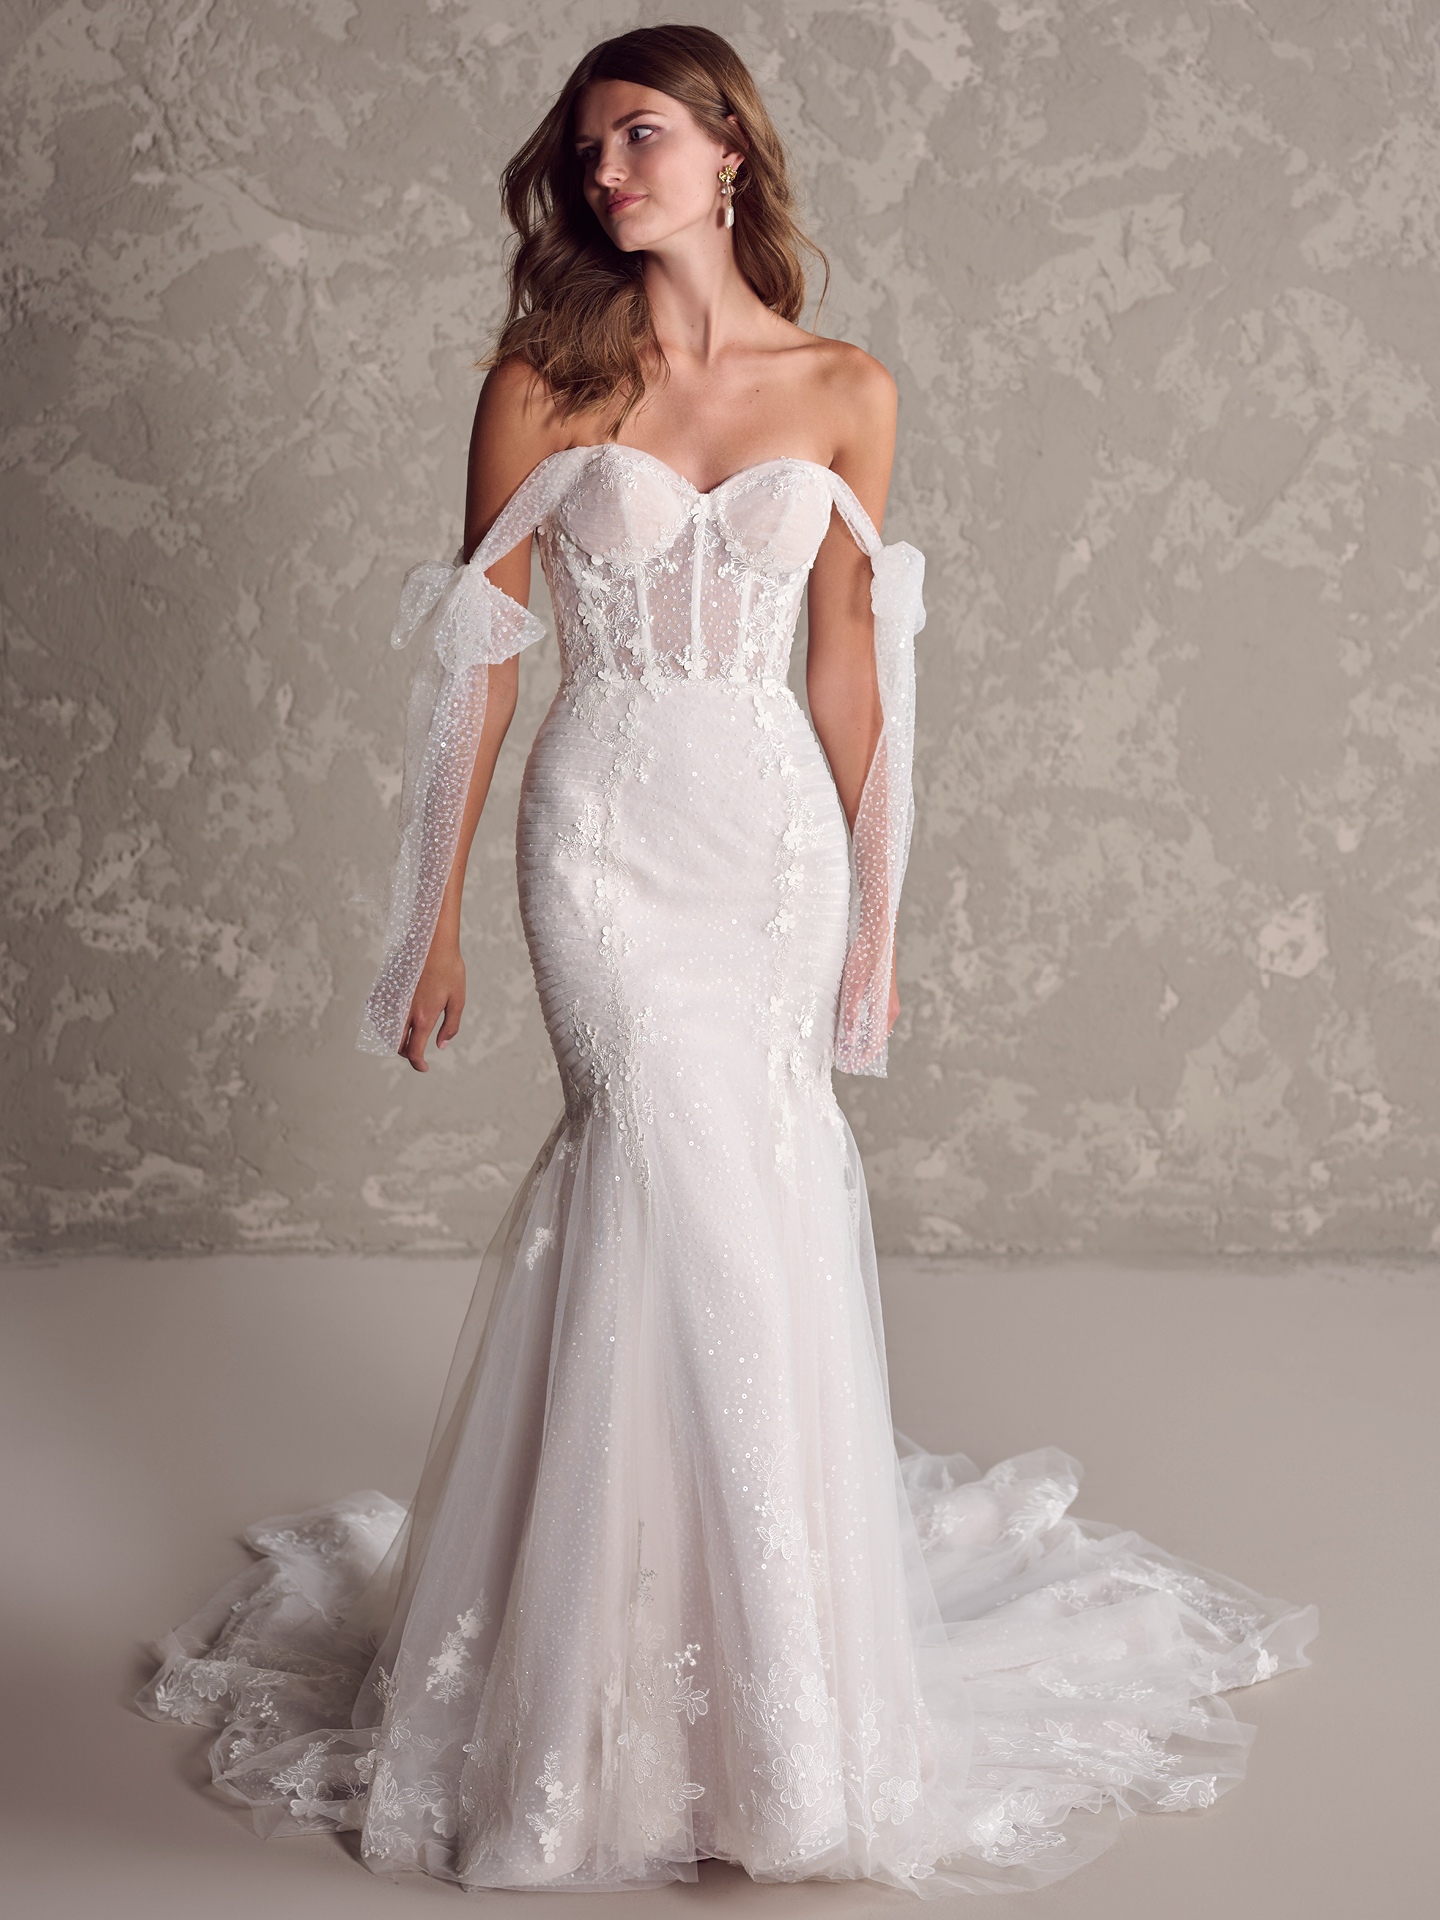 Tuscany Royale Sparkly Lace Sheath Sottero Dress Maggie | Bridal